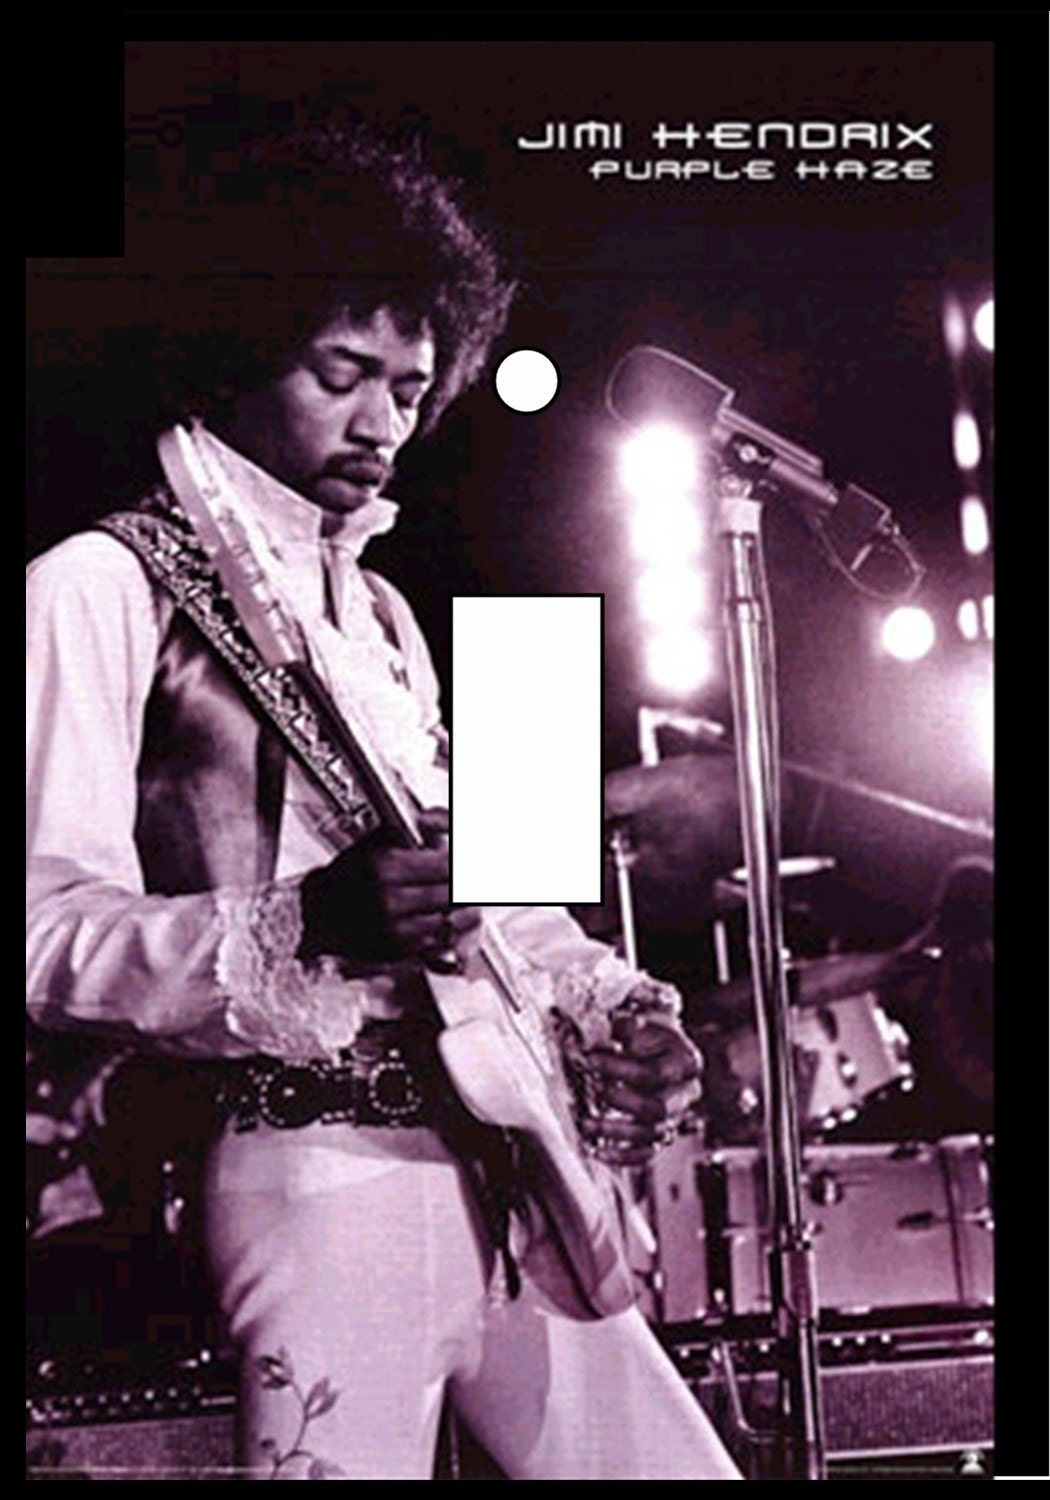 Jimi Hendrix Purple Haze single toggle light switch cover